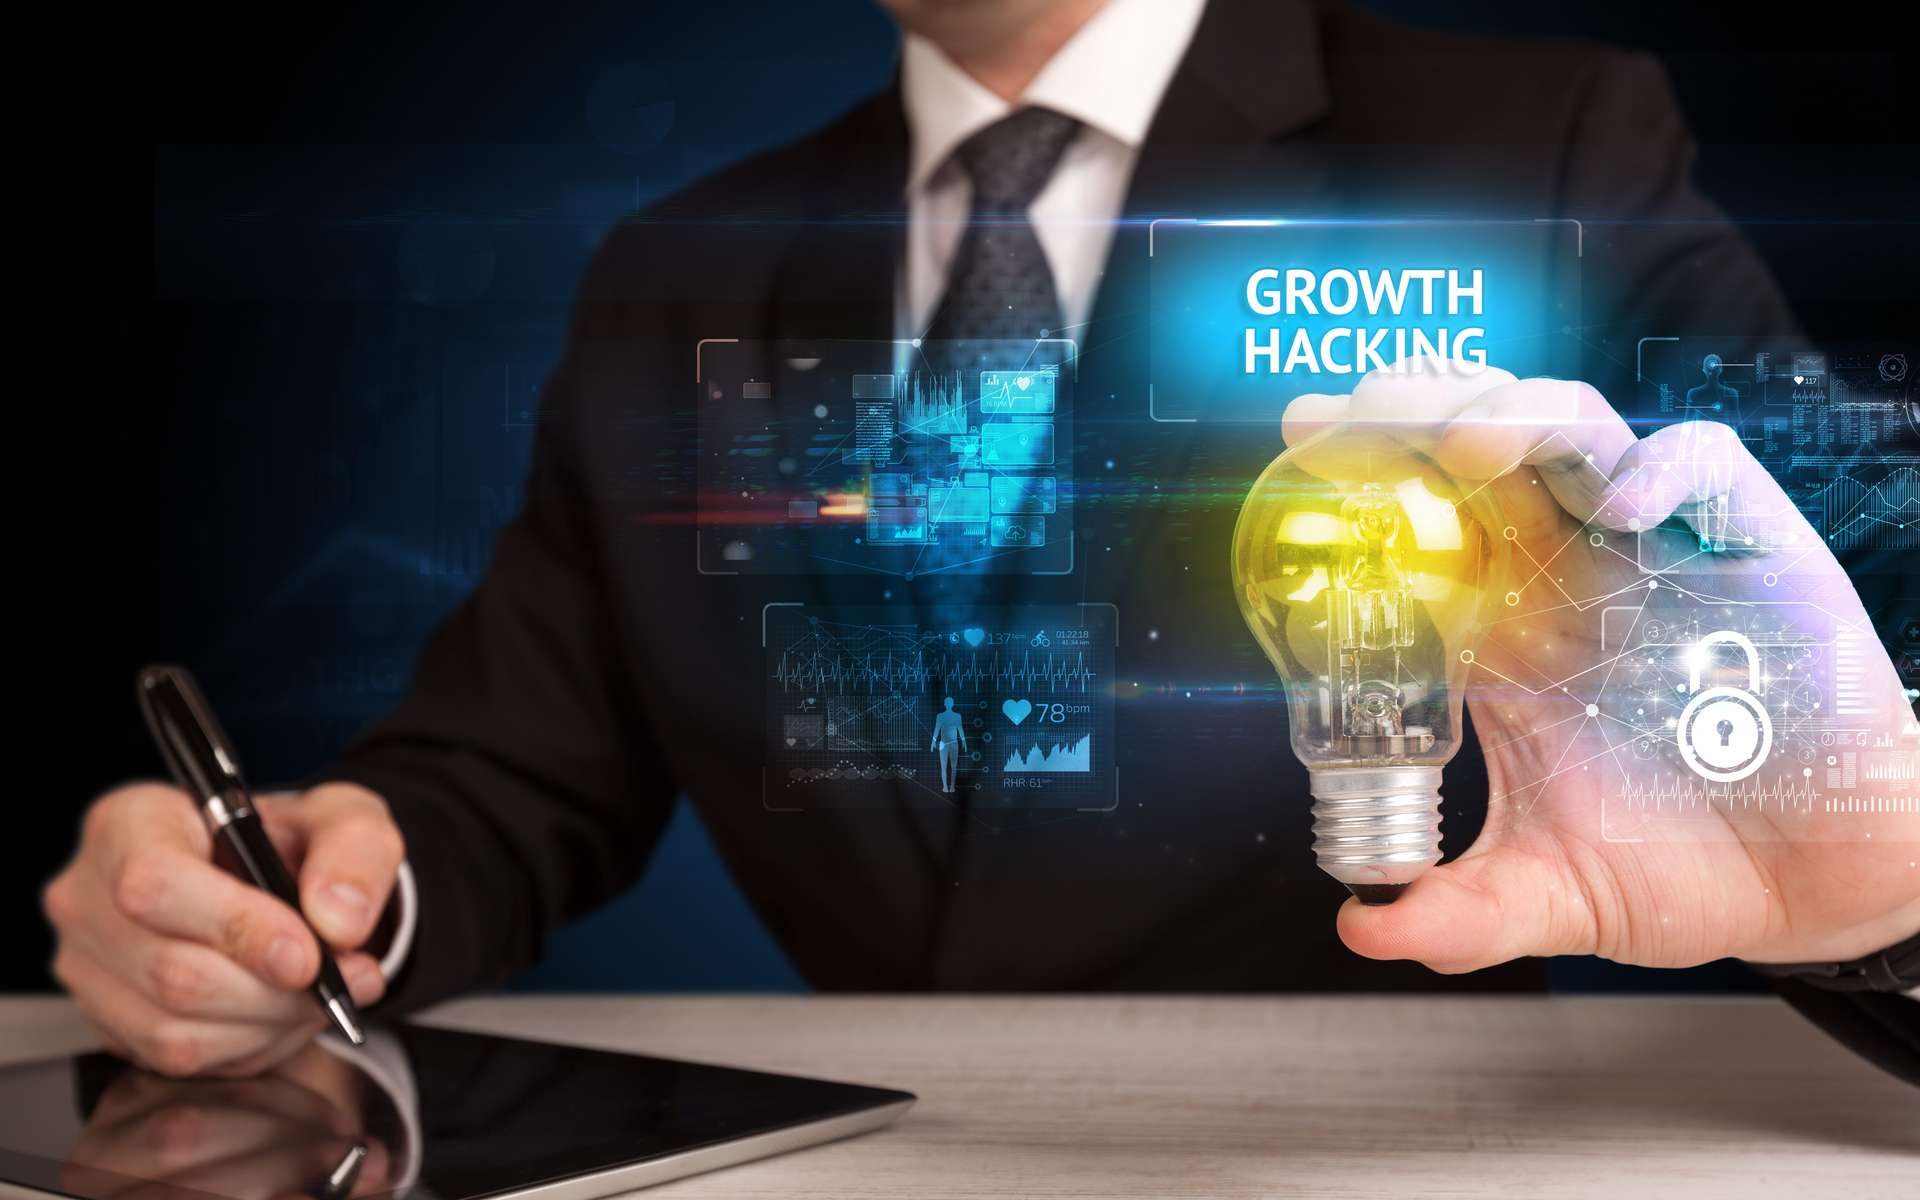 Formation Growth Hacking -86% : le guide complet pour booster votre business !